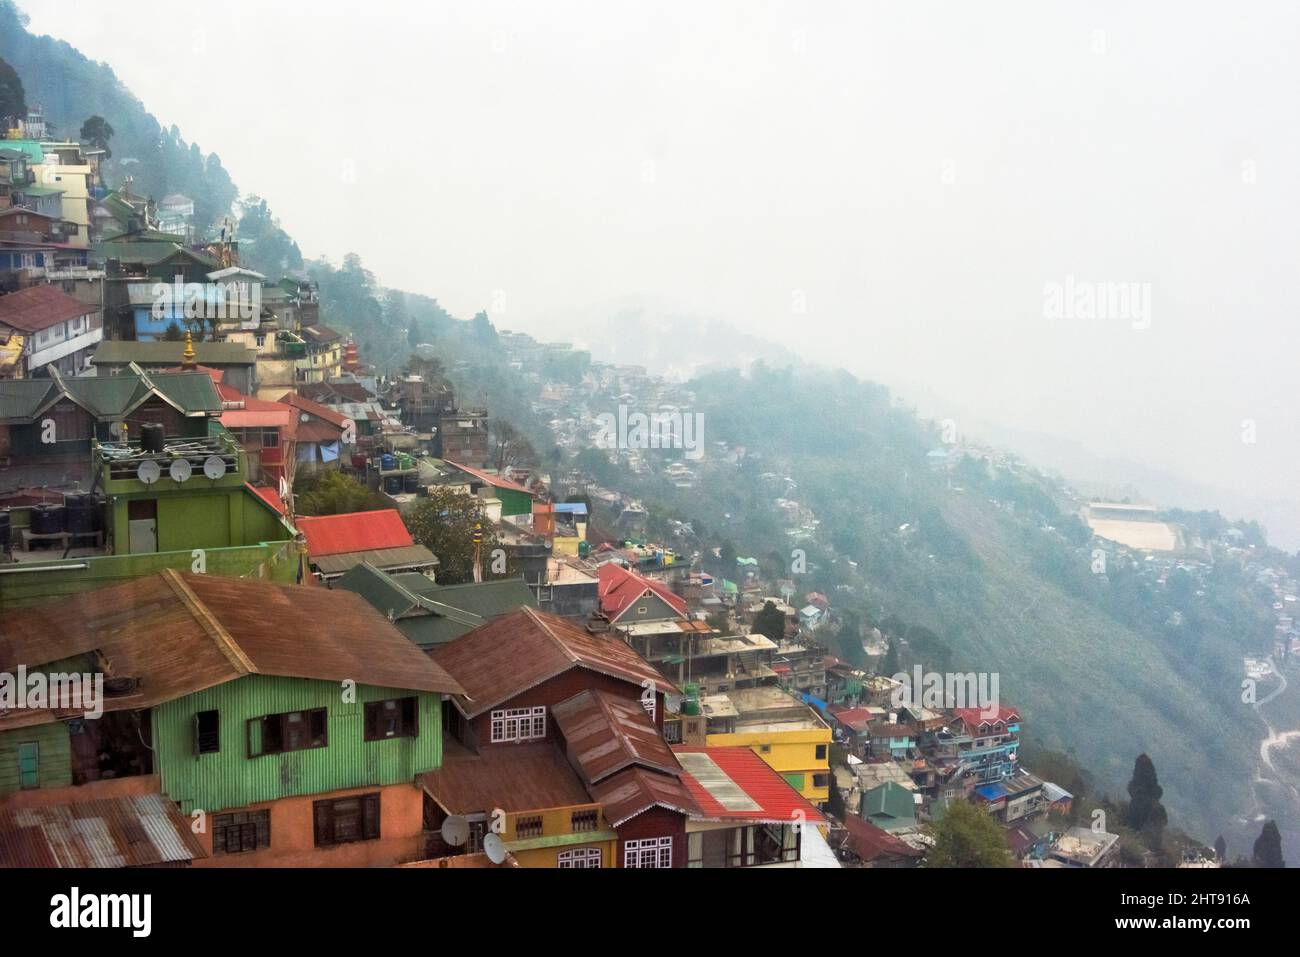 Houses on the hillside, Darjeeling, West Bengal, India Stock Photo